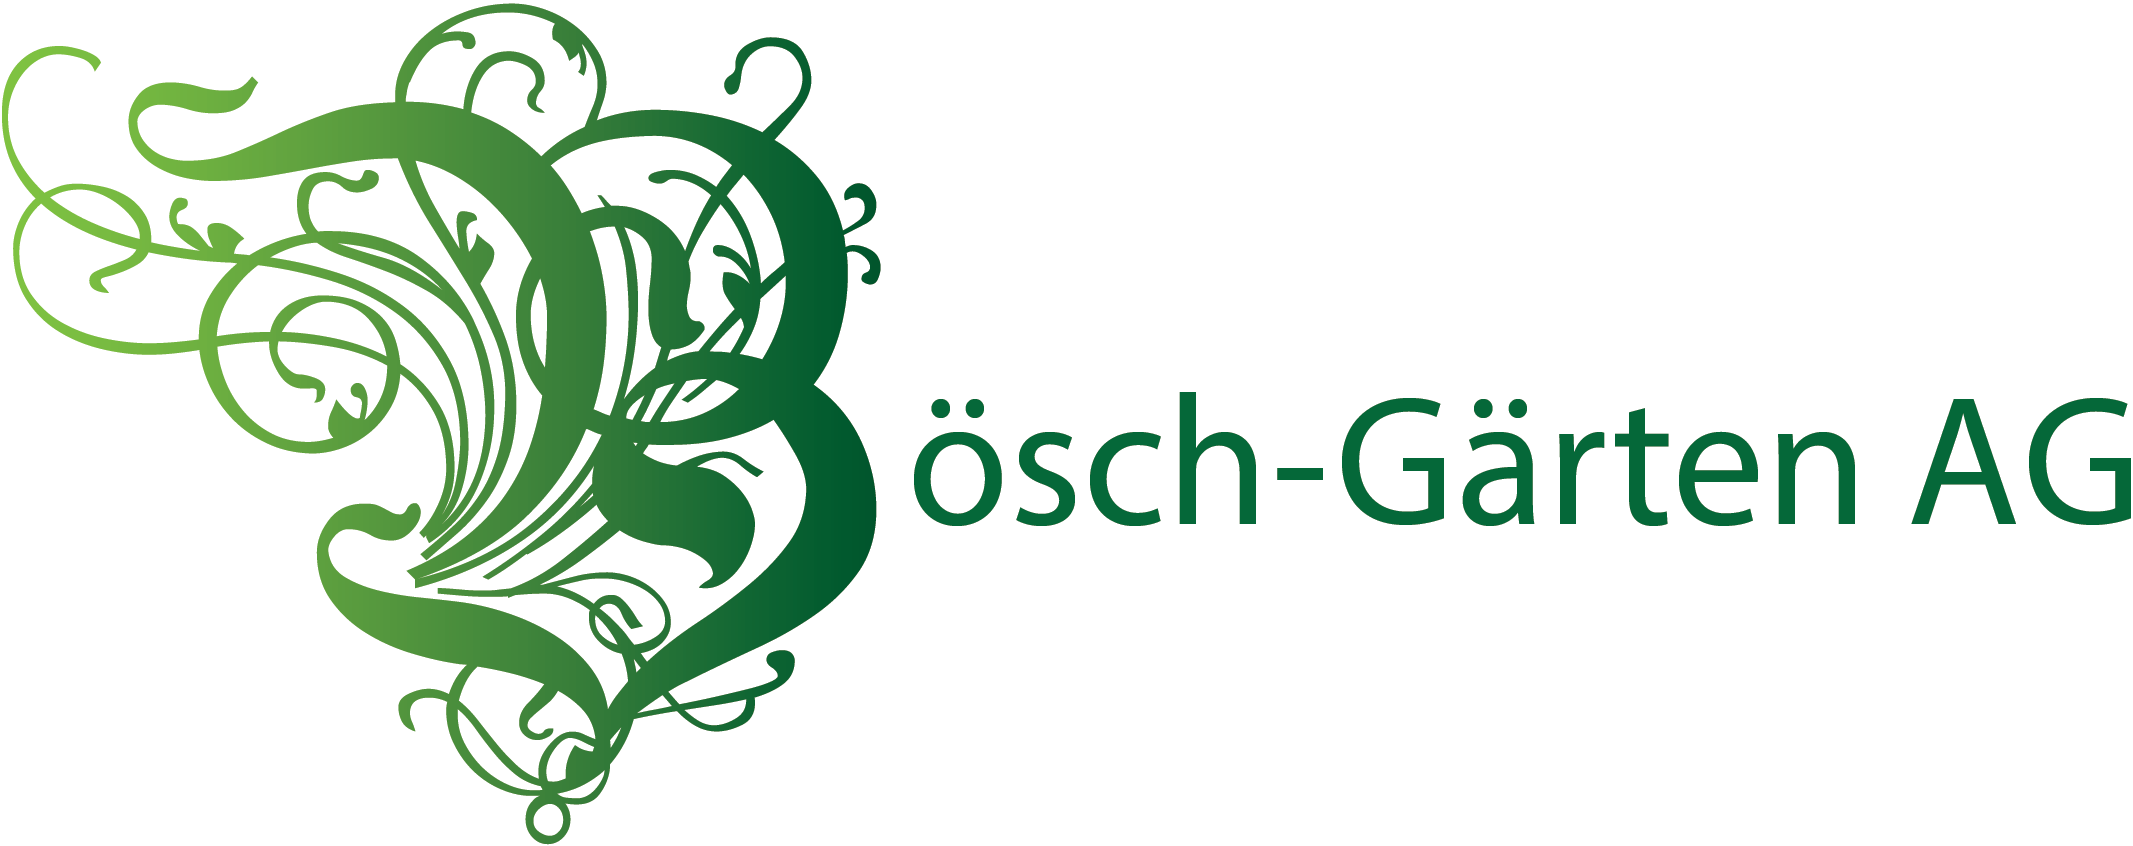 Bösch-Gärten AG